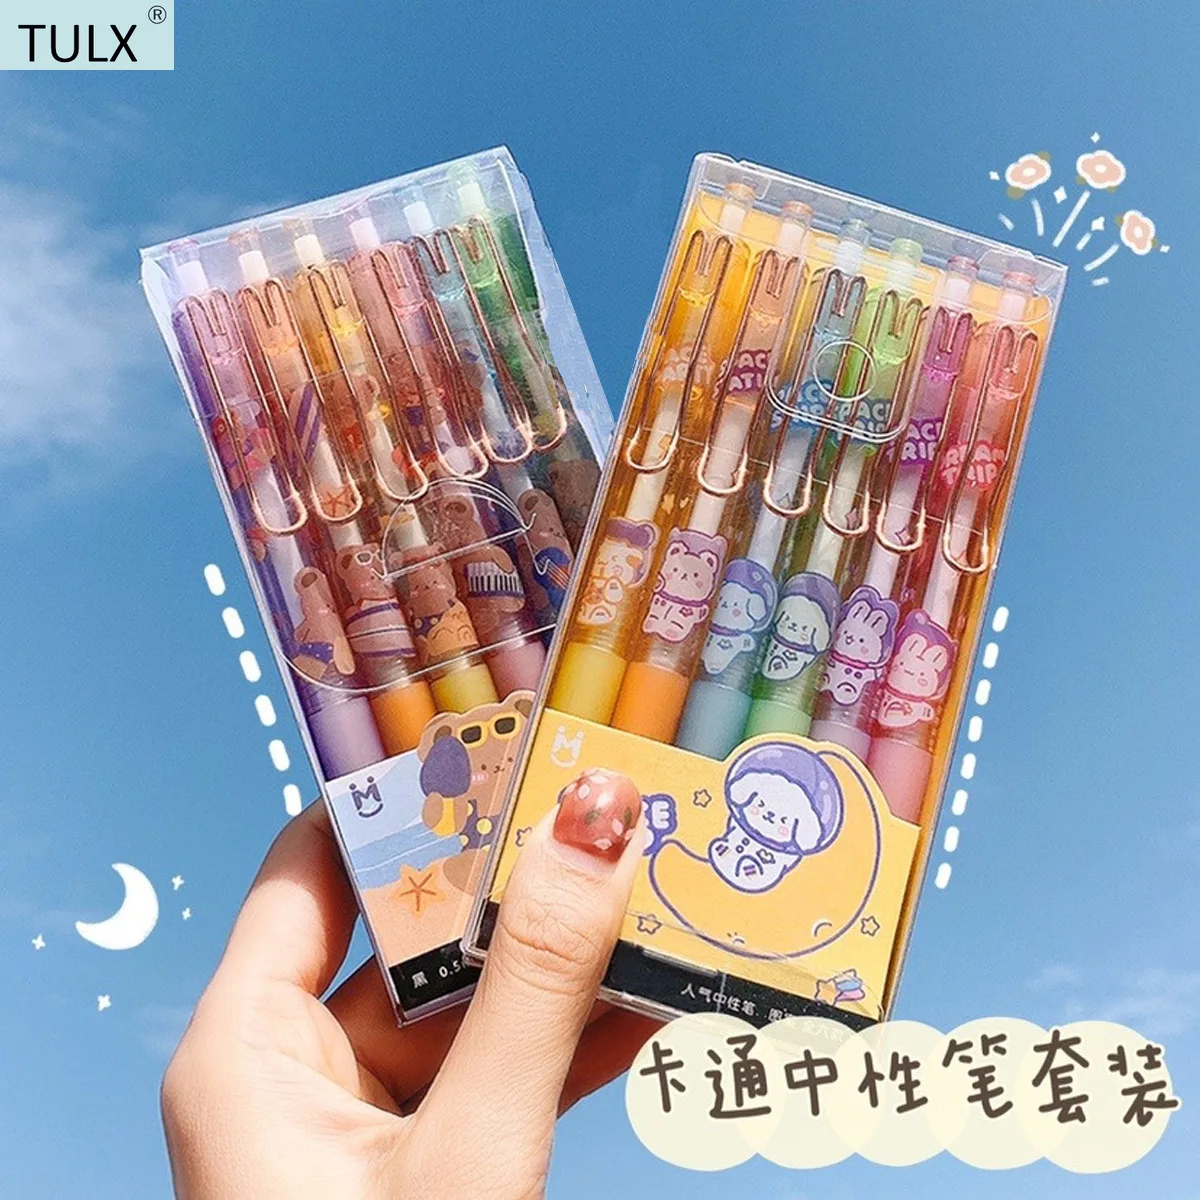 

TULX 6PCS cute stationary supplies school supplies kawaii kawaii pens cute school supplies cute stationary